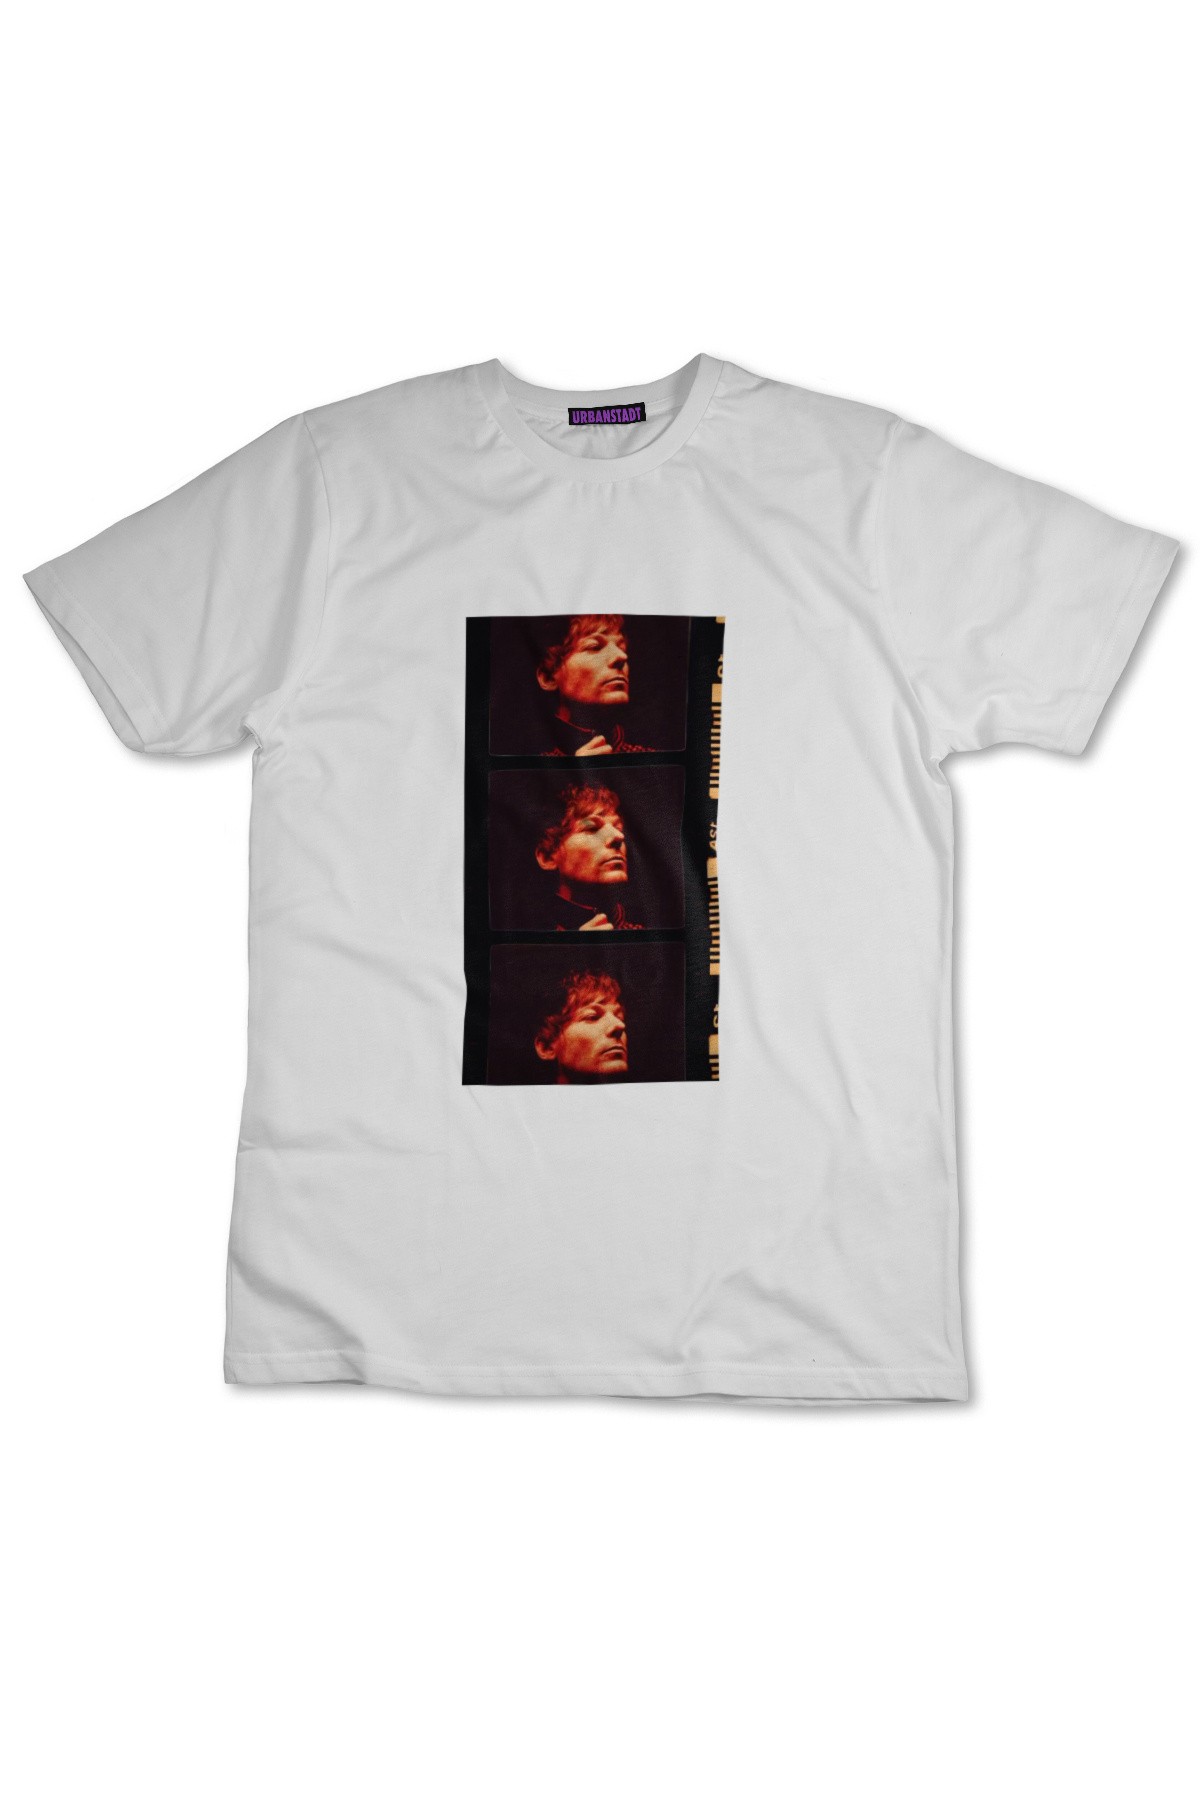 Louis Tomlinson Faith In The Future Tişört T-shirt